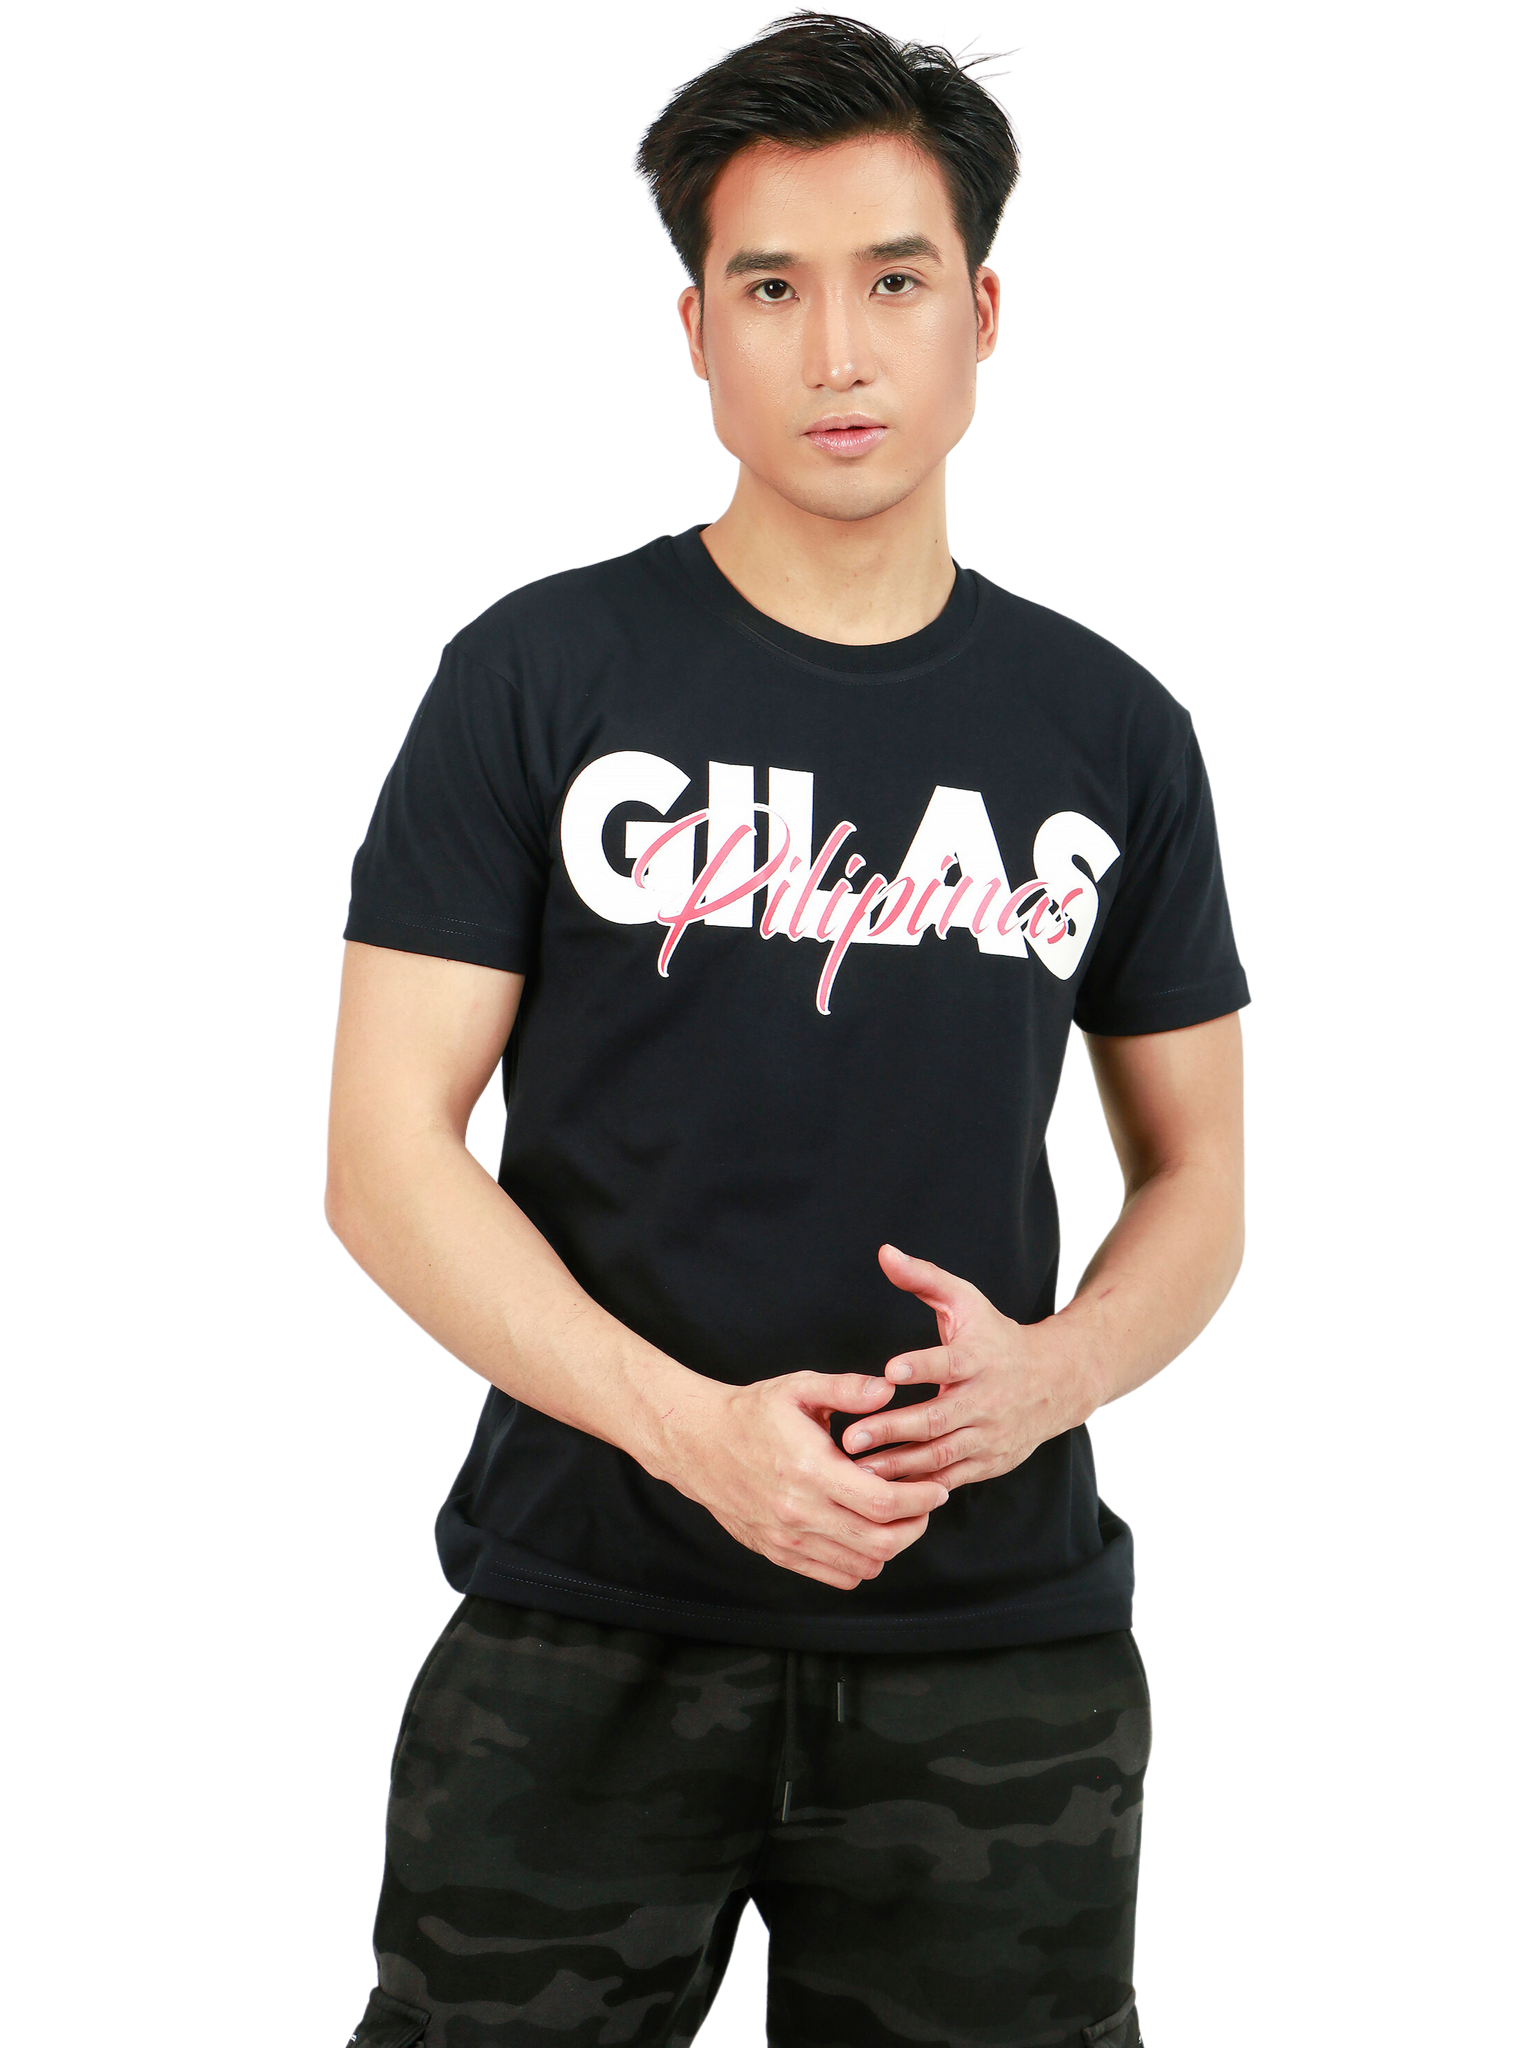 GILAS PILIPINAS in Black for Mens